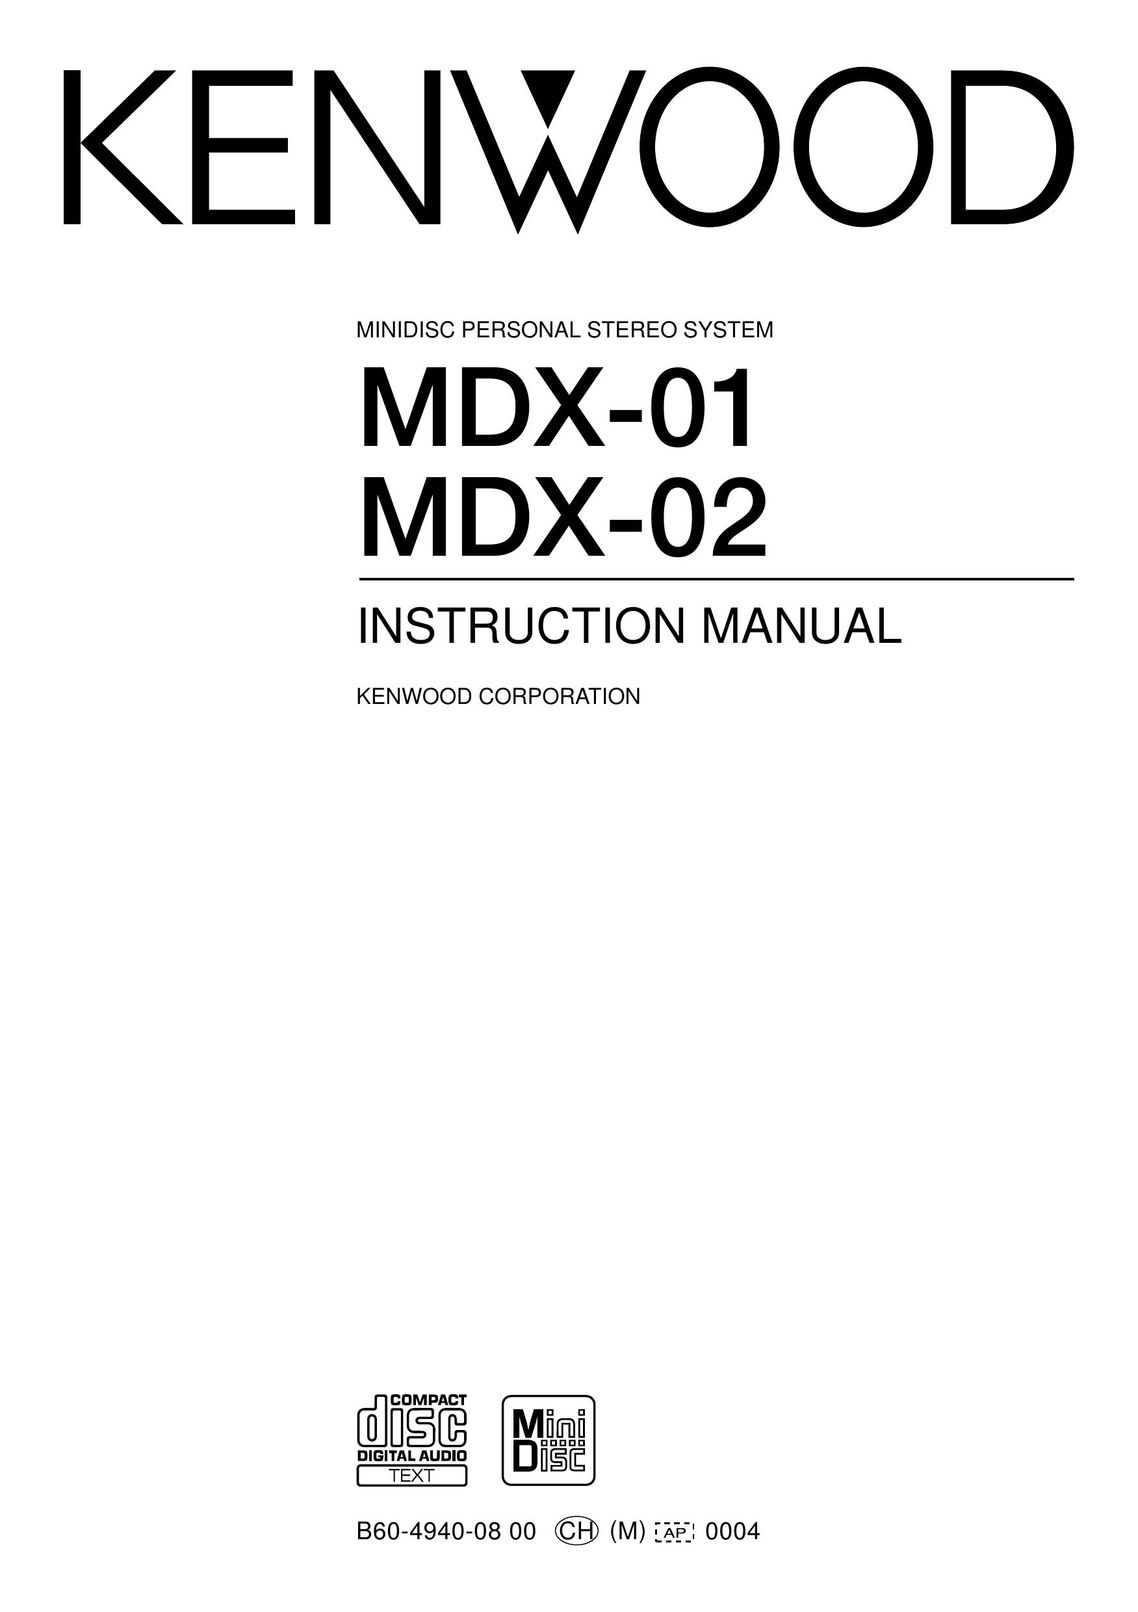 Kenwood MDX-01 MiniDisc Player User Manual